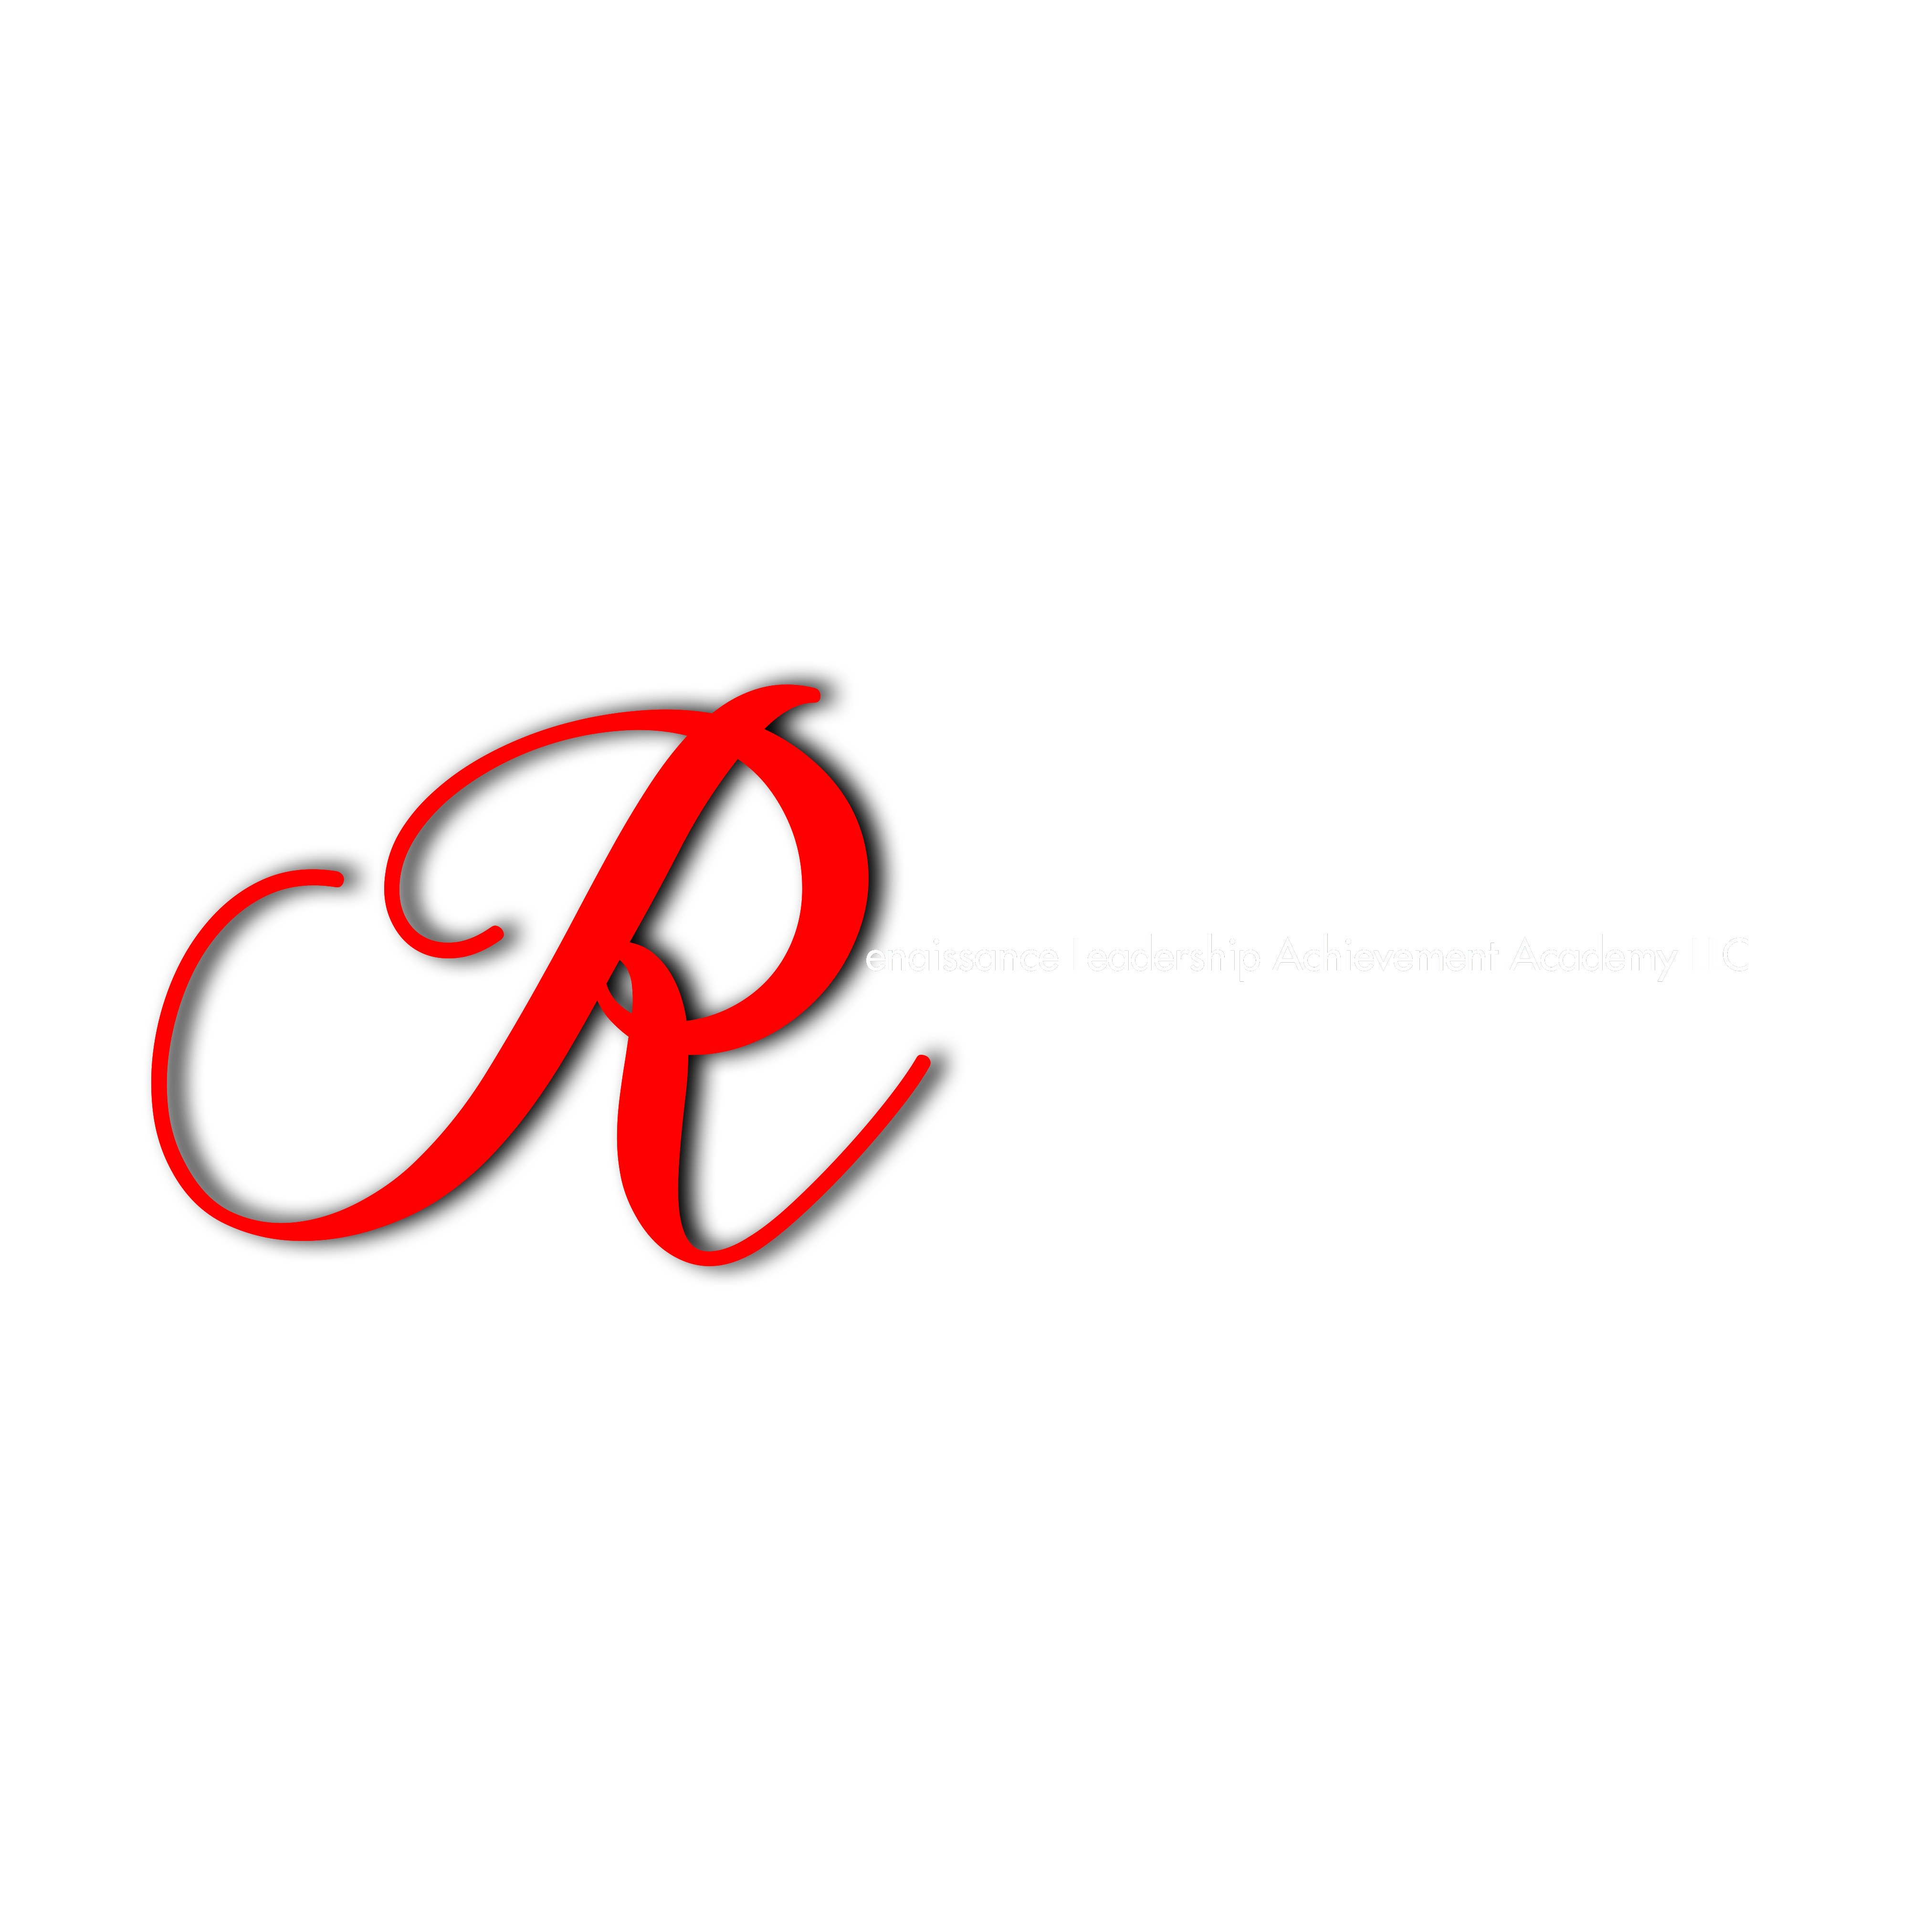 Renaissance Leadership Achievement Academy LLC